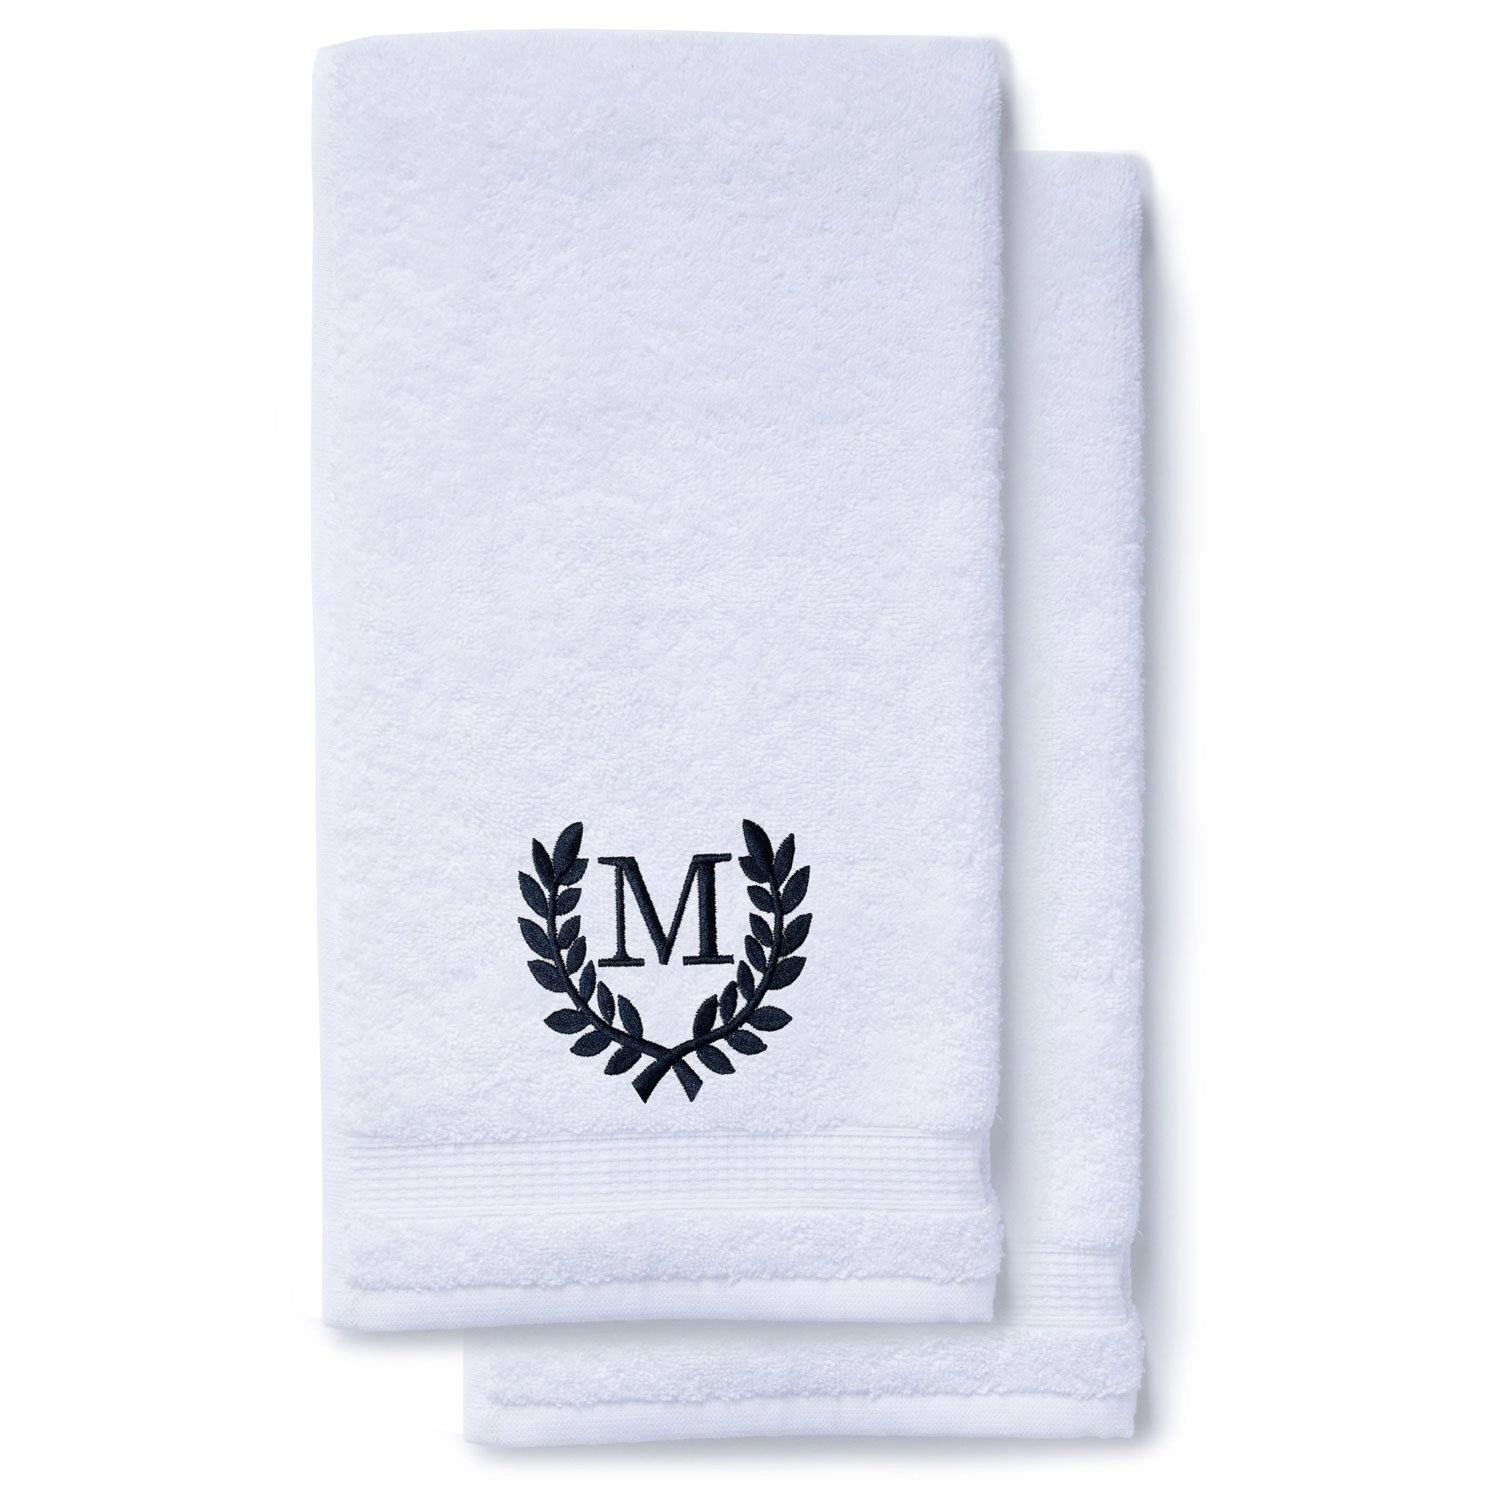 https://robemart.com/images/thumbnails/detailed/7/M-Navy-stacked-Monogrammed-Hand-Towels-for-Bathroom.webp